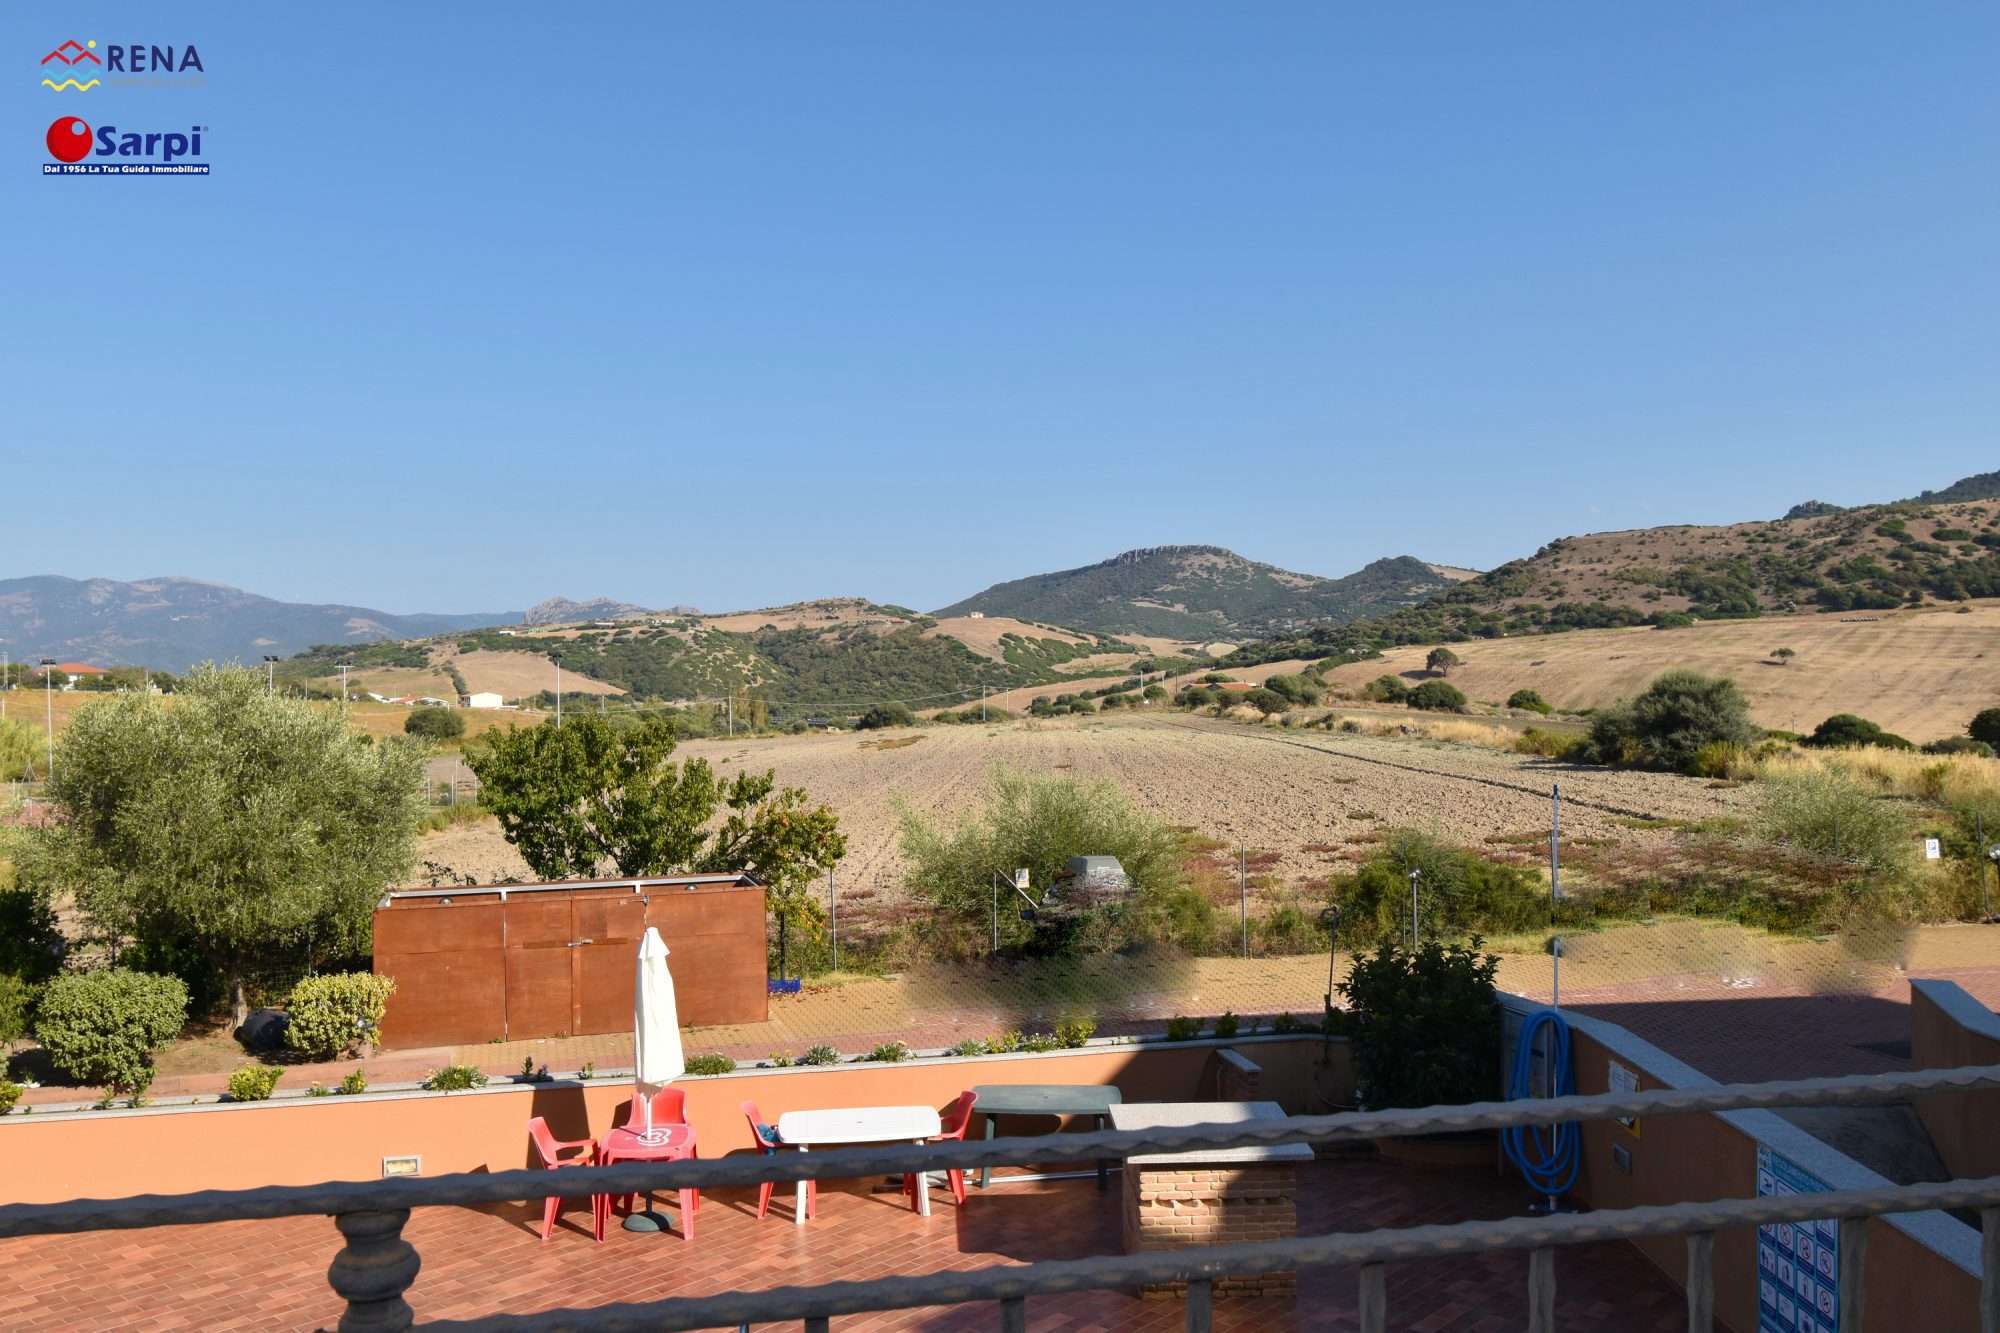 Comodo bilocale in residence con piscina – Valledoria